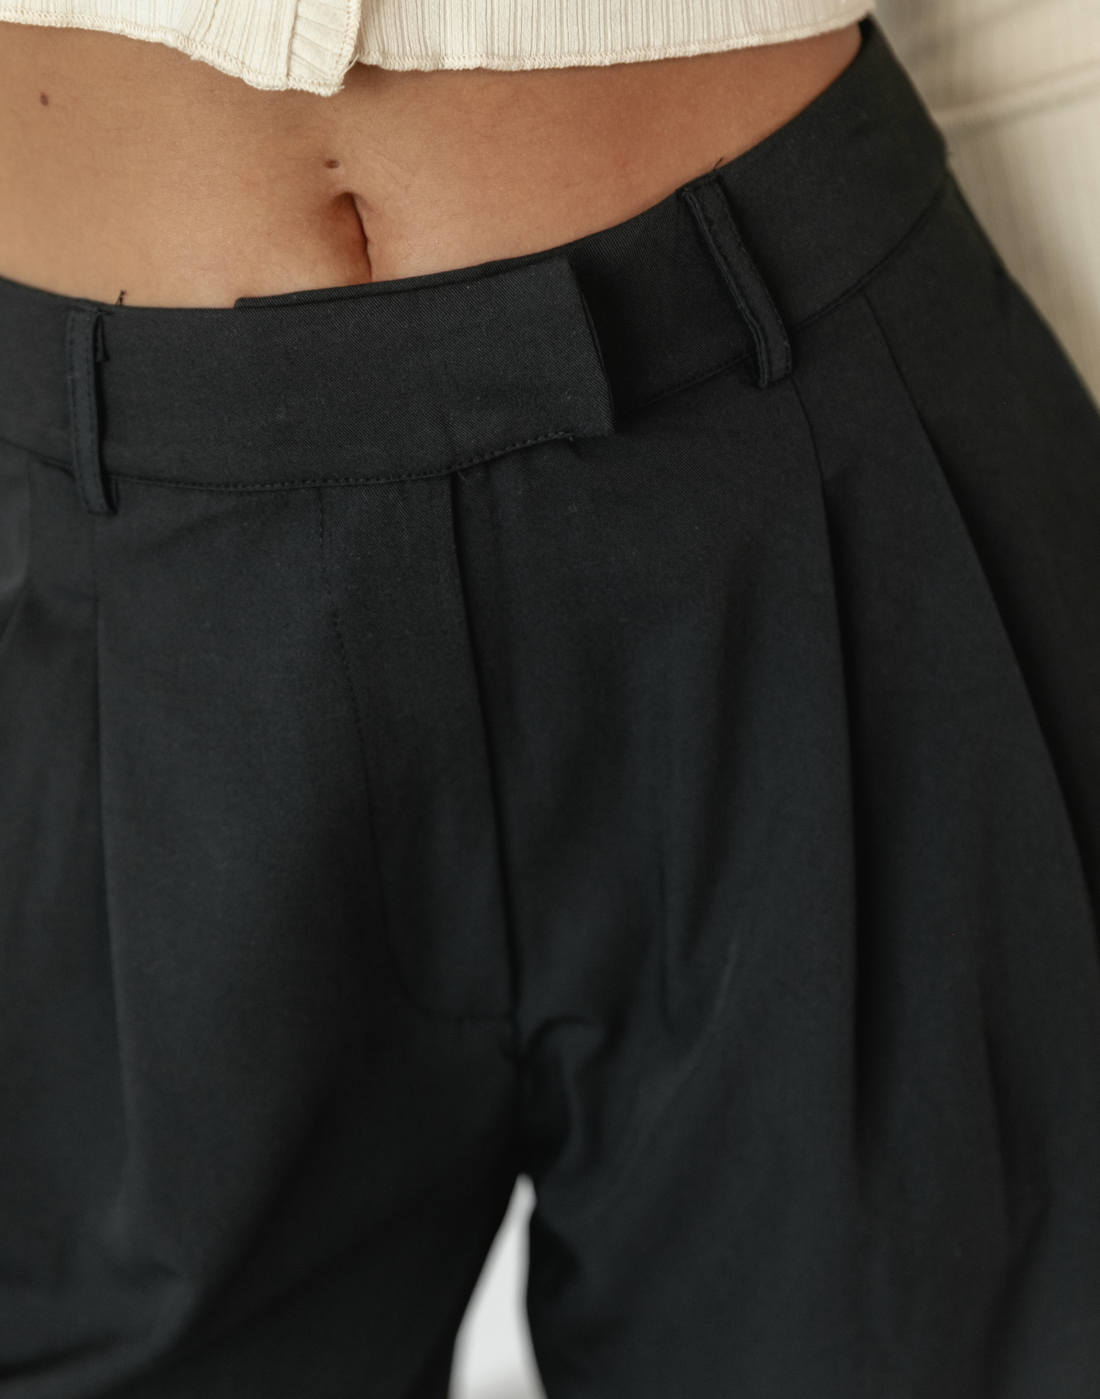 Ruxton Pants (Black) - Black Tailored Pants - Women's Pants - Charcoal Clothing